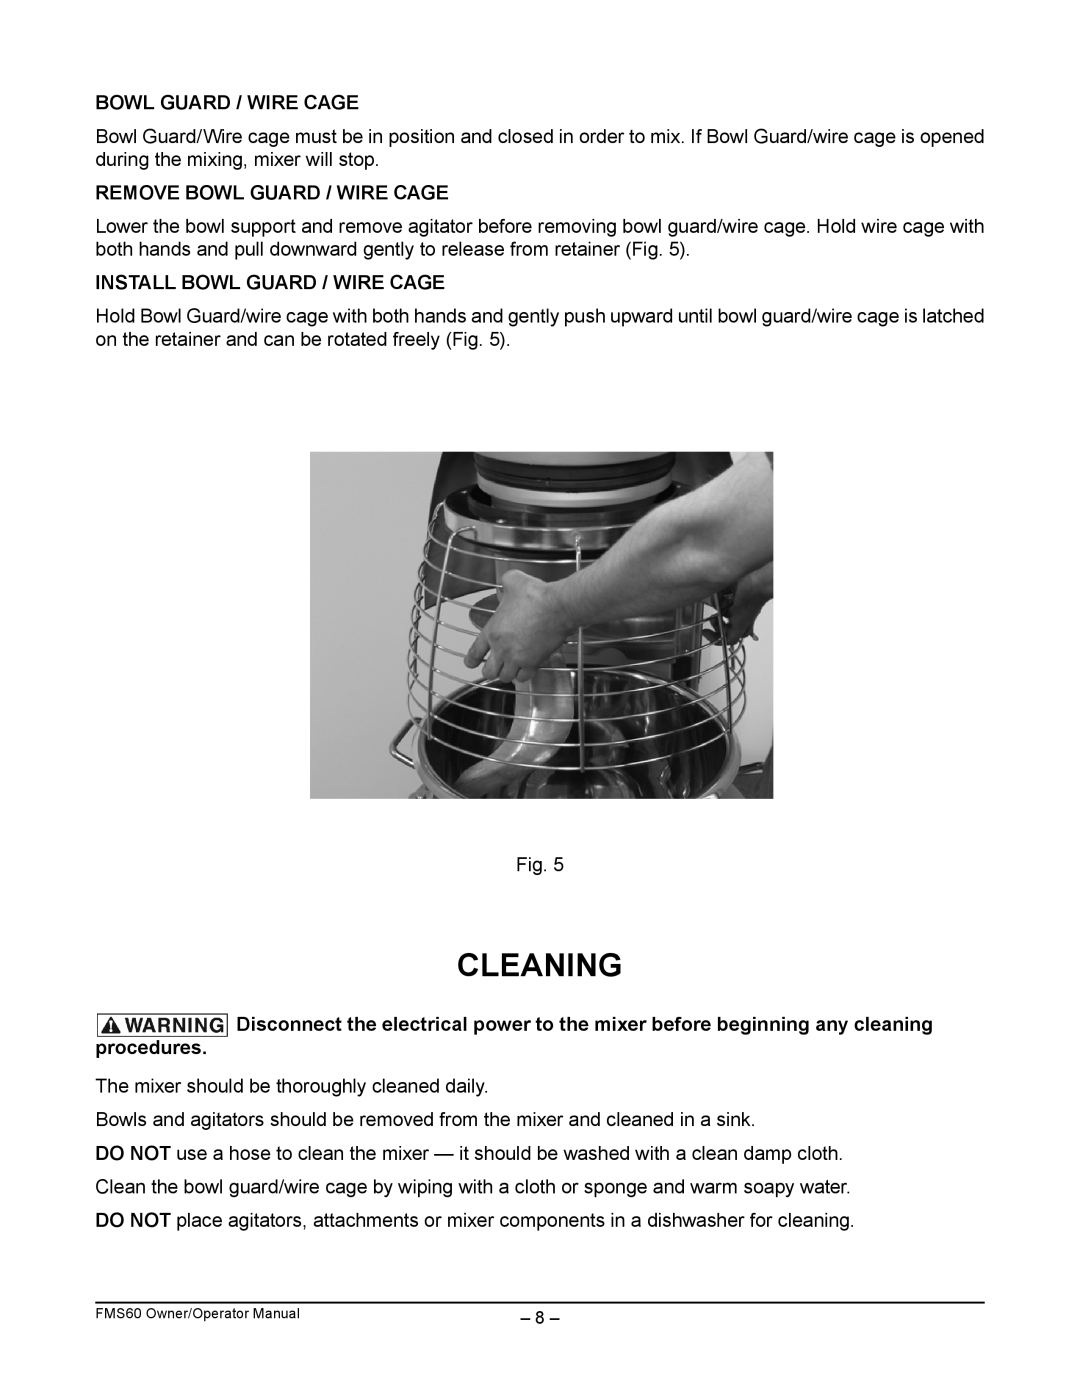 Berkel FMS60 manual Cleaning, Remove Bowl Guard / Wire Cage, Install Bowl Guard / Wire Cage, procedures 